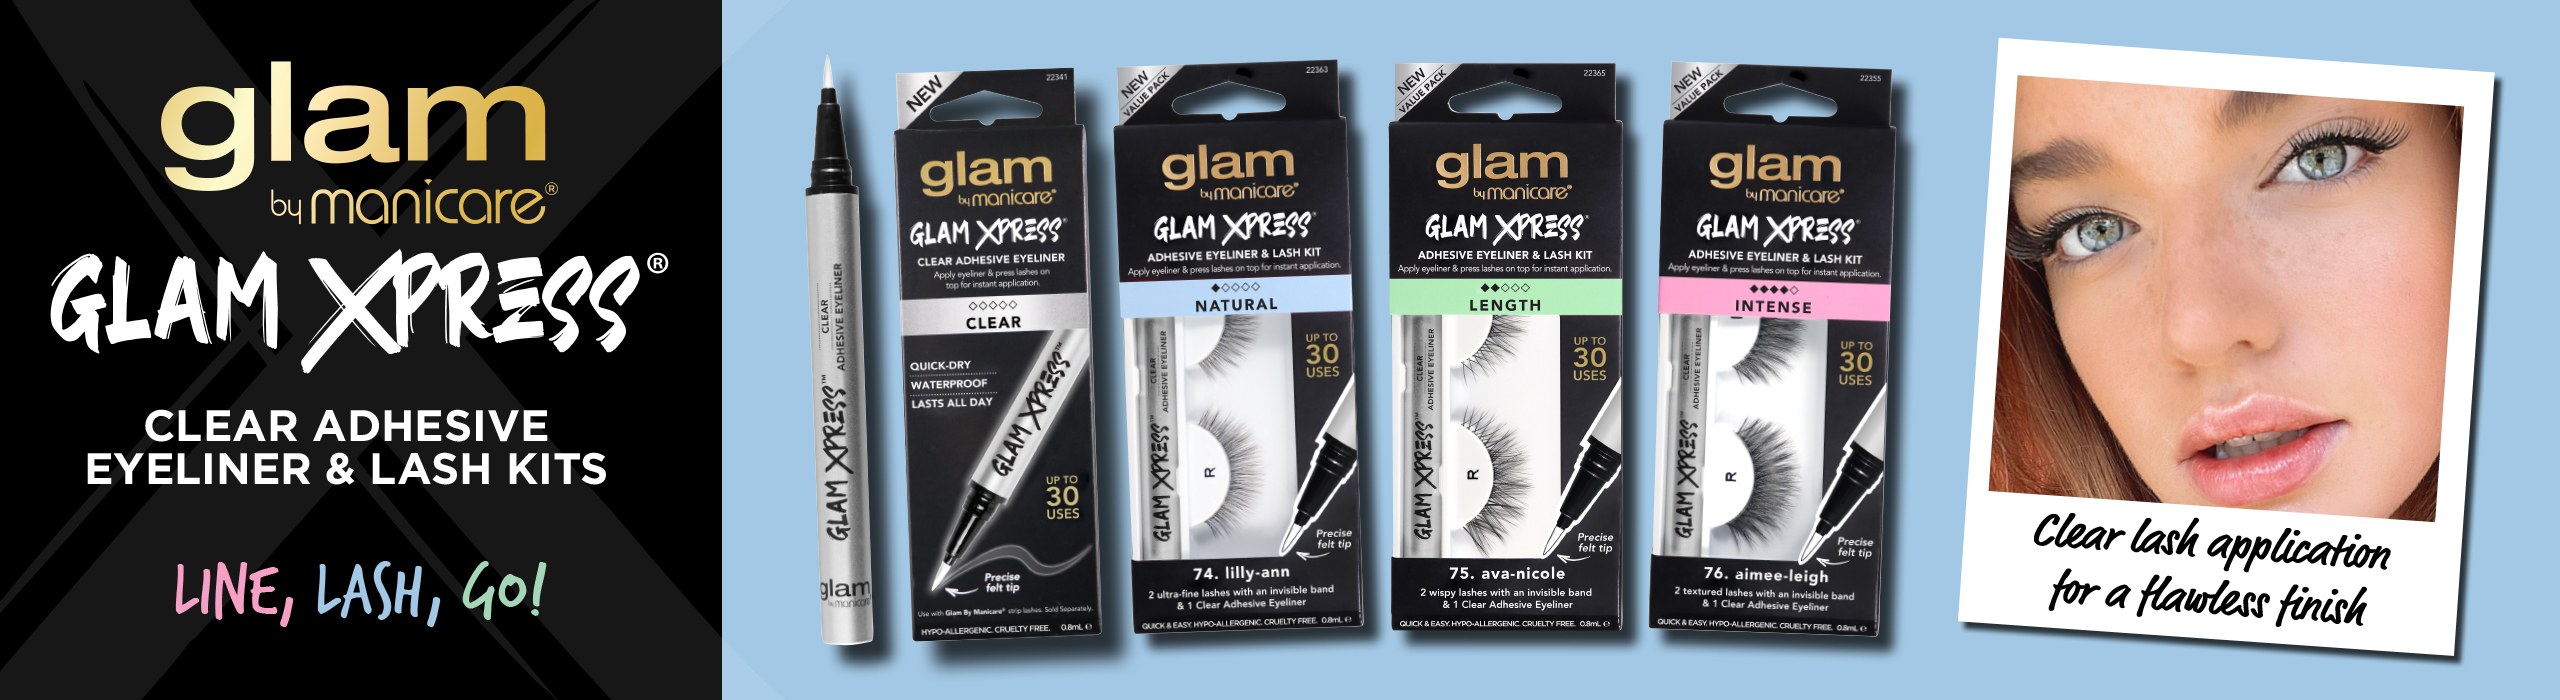 Glam Xpress™ Clear Adhesive Eyeliner & Lash Kits. Line Lash Go!